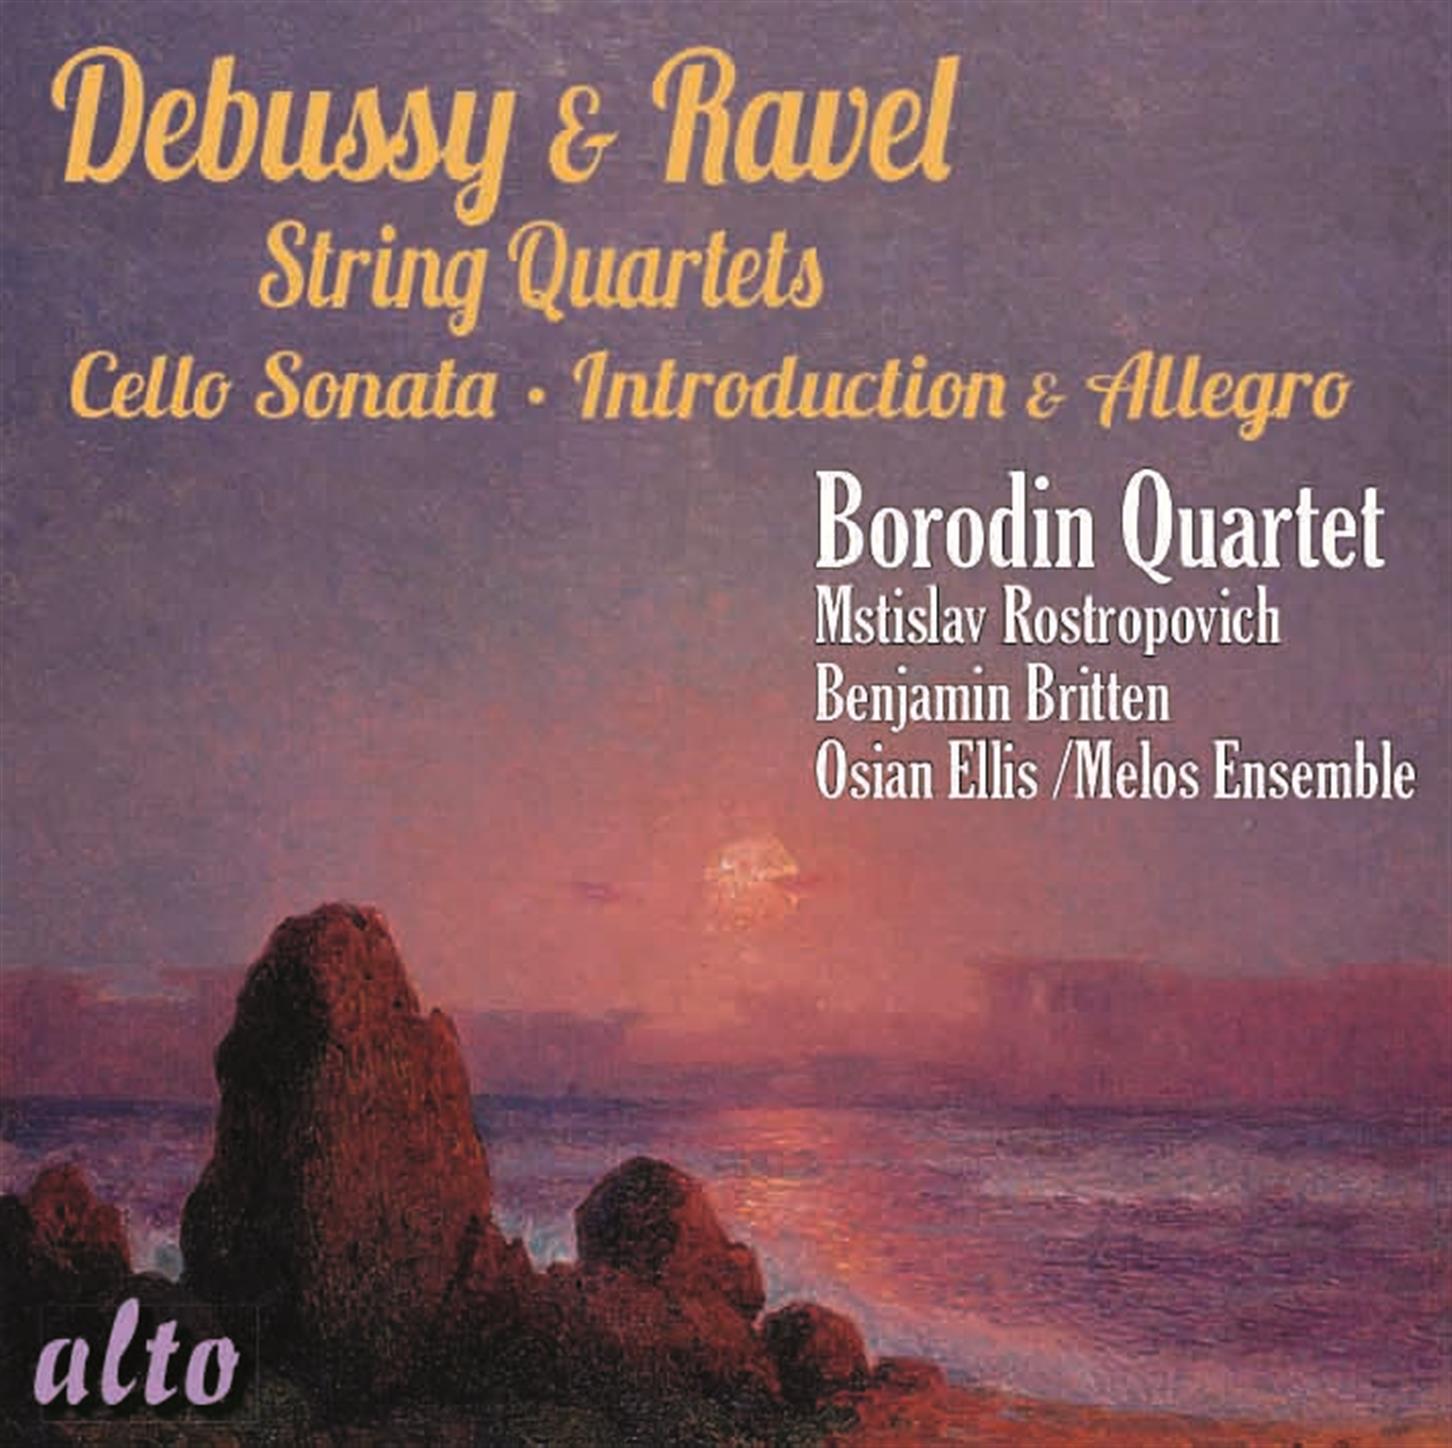 String Quartet in G Minor Op. 10: II. Assez vif et bien rythme